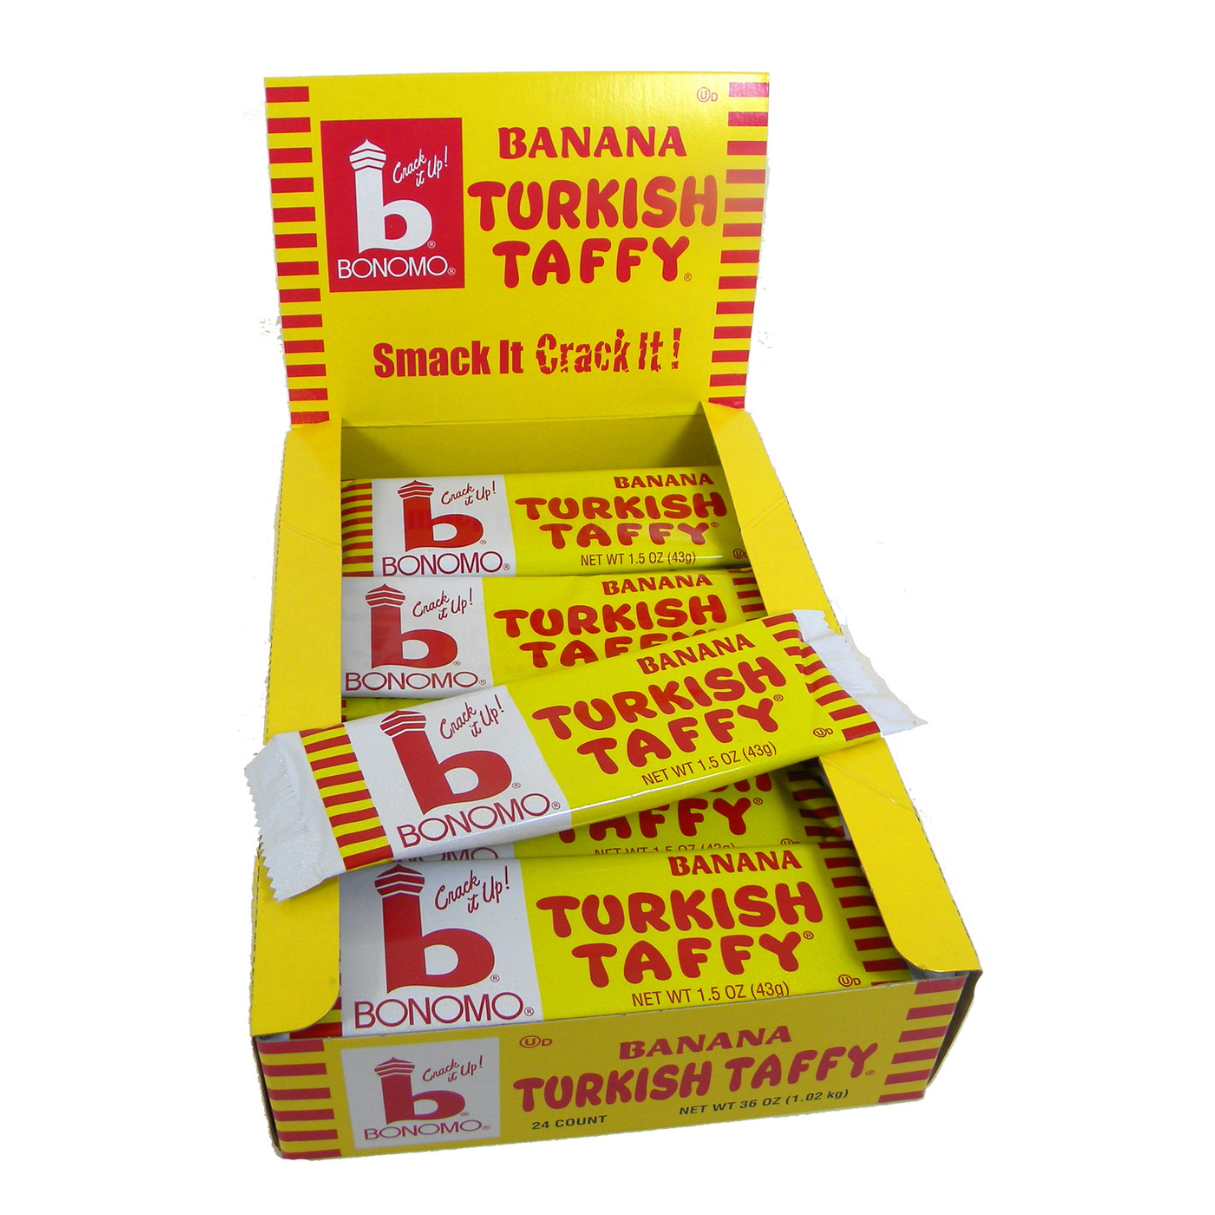 Turkish Taffy Banana 1.5oz - 24ct